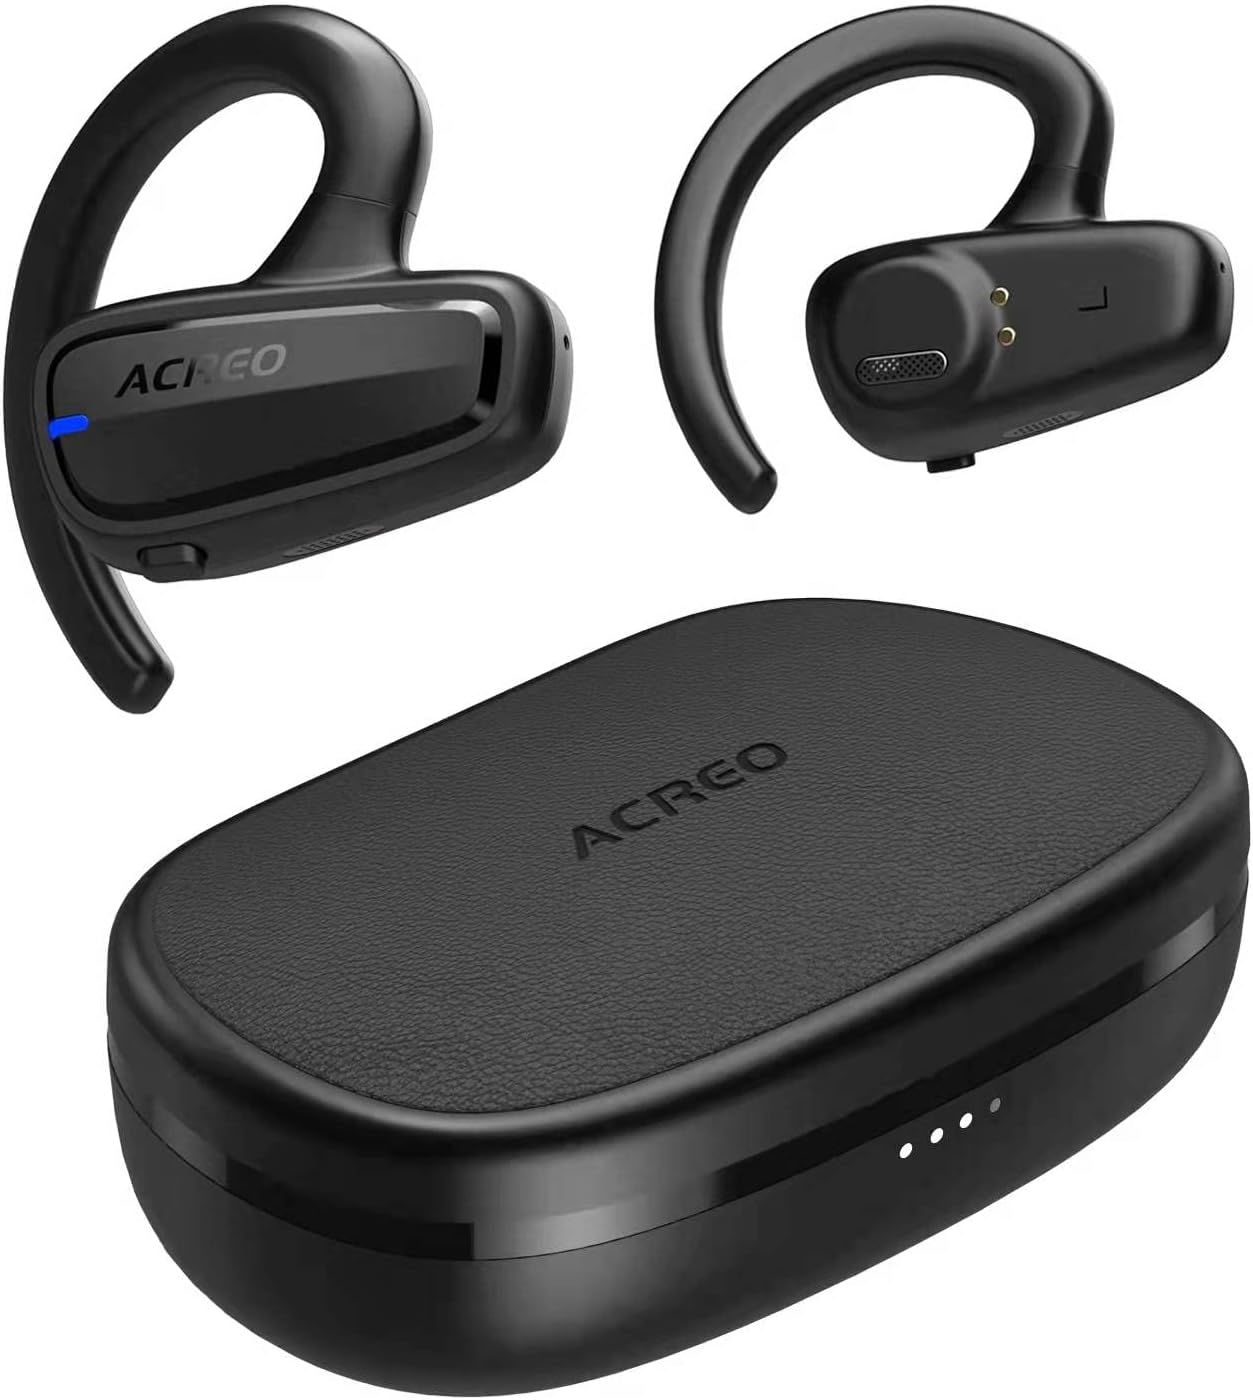 ACREO The Next Generation Open Ear Headphones - $35